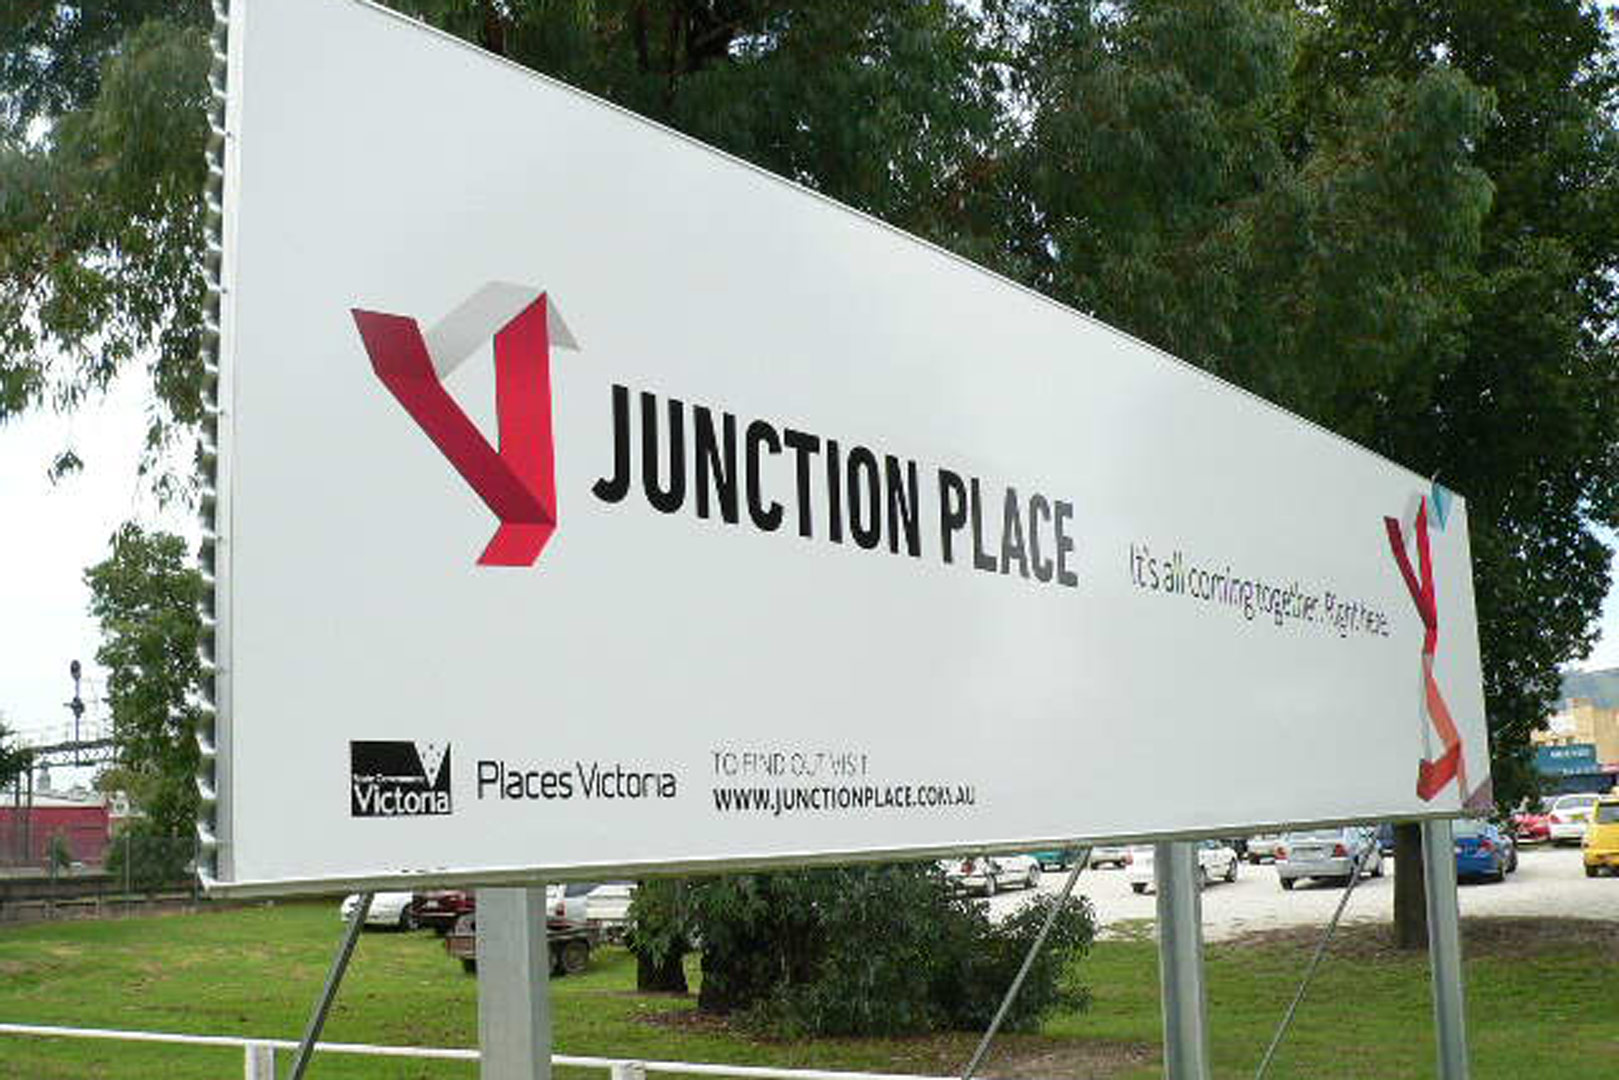  Junction Place Wodonga 